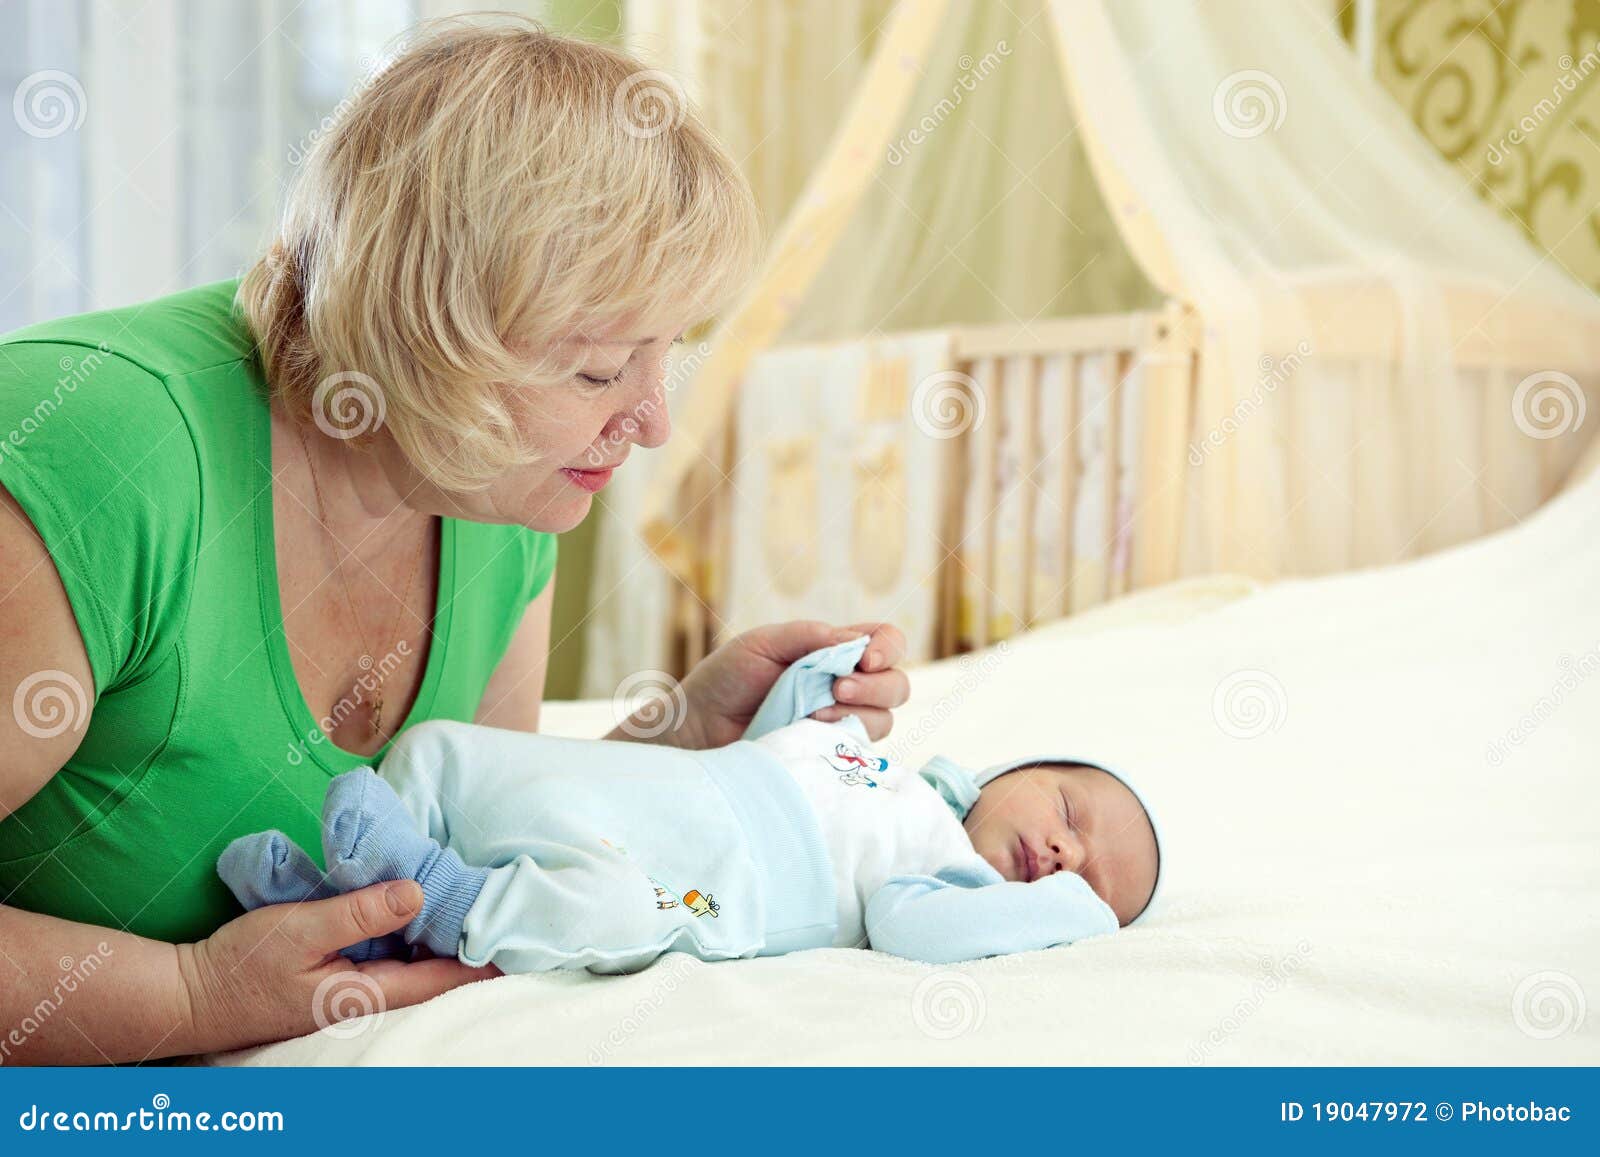 https://thumbs.dreamstime.com/z/pretty-middle-aged-woman-her-newborn-grandson-19047972.jpg